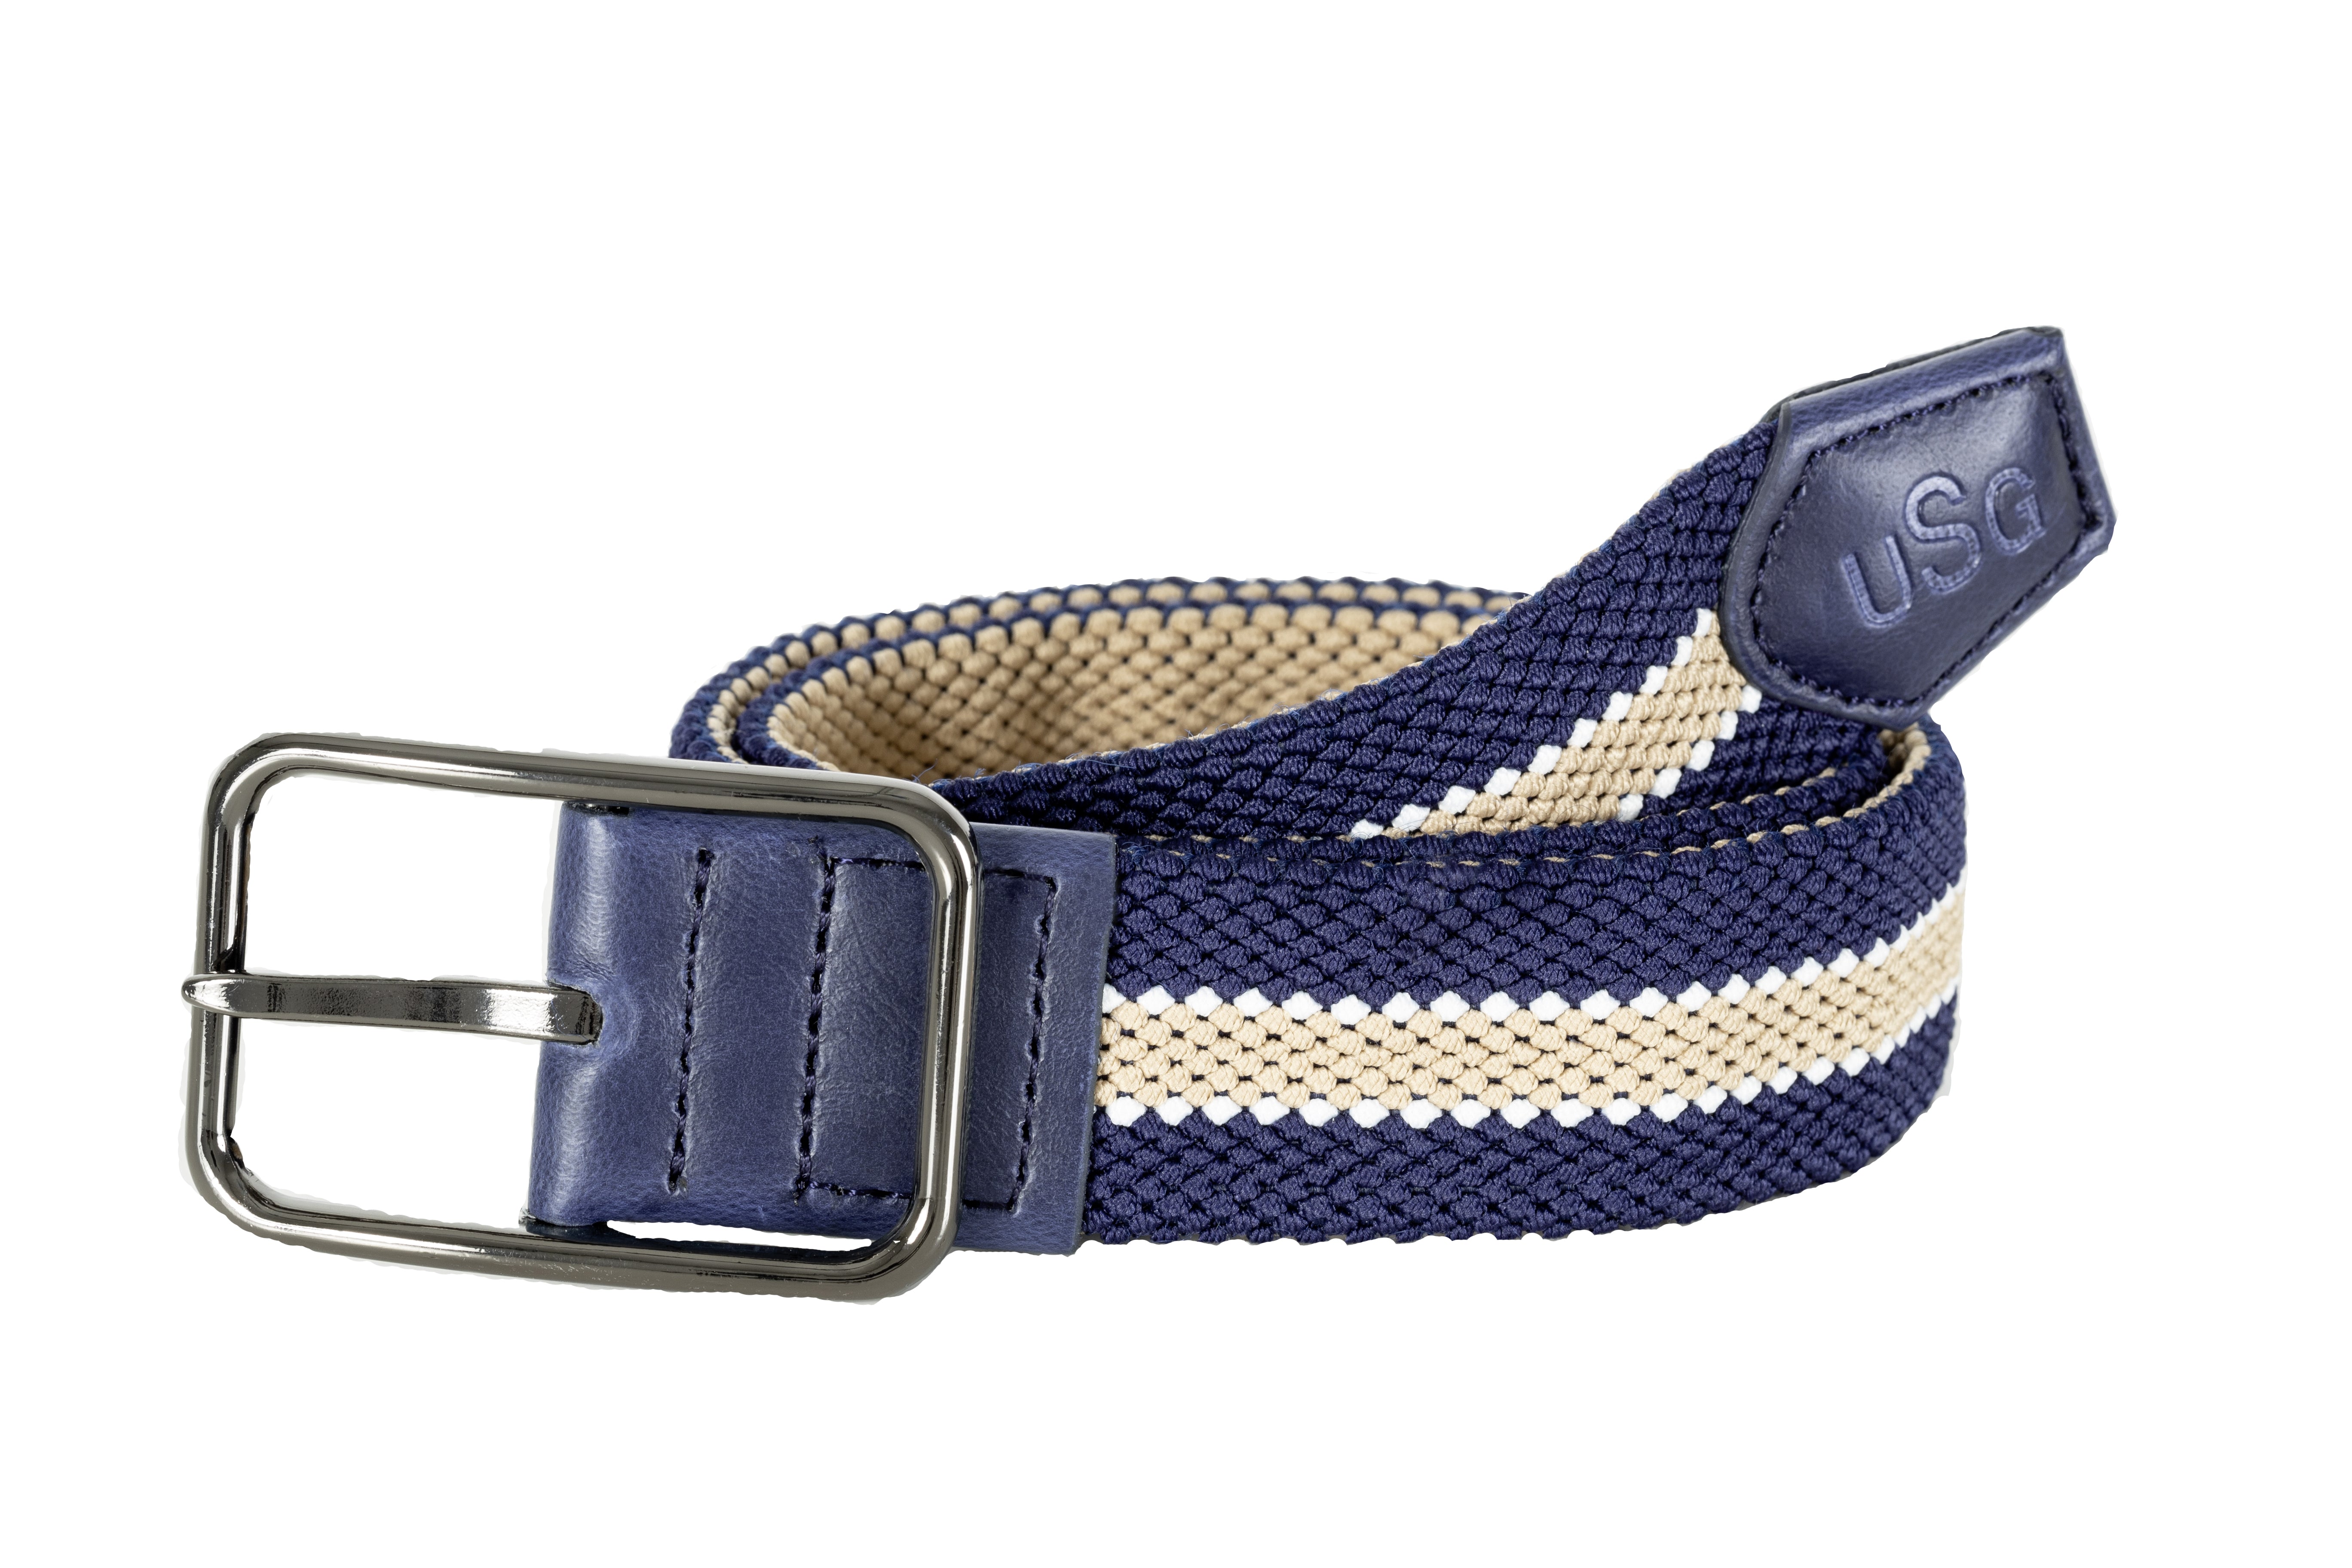 USG Cinto Reversible Elastic Belt